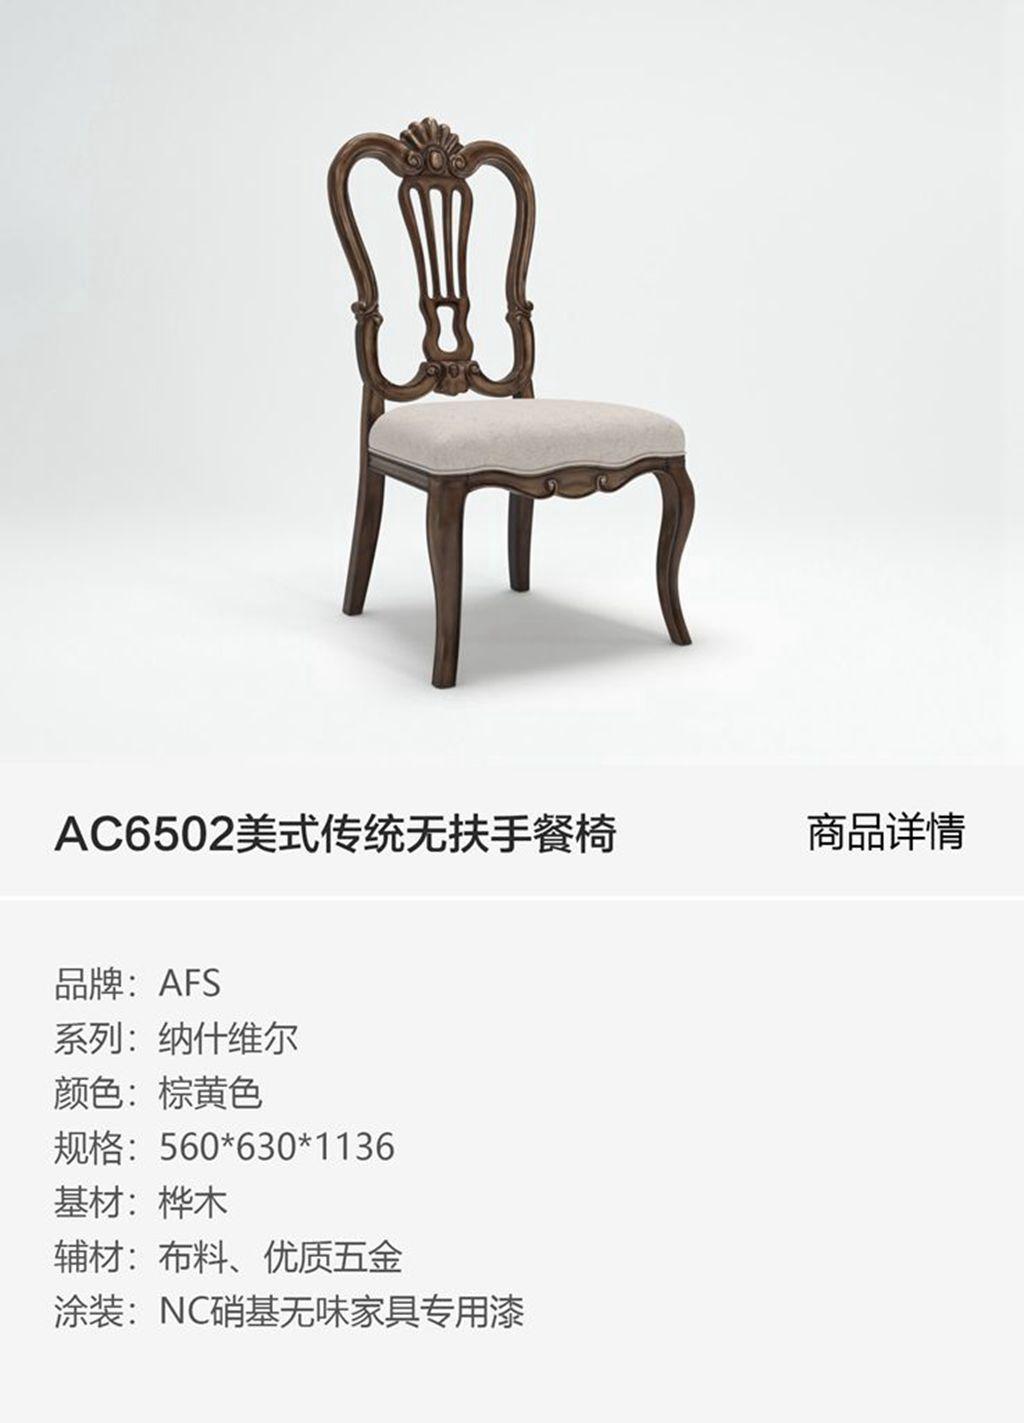 AC6502美式传统无扶手餐椅